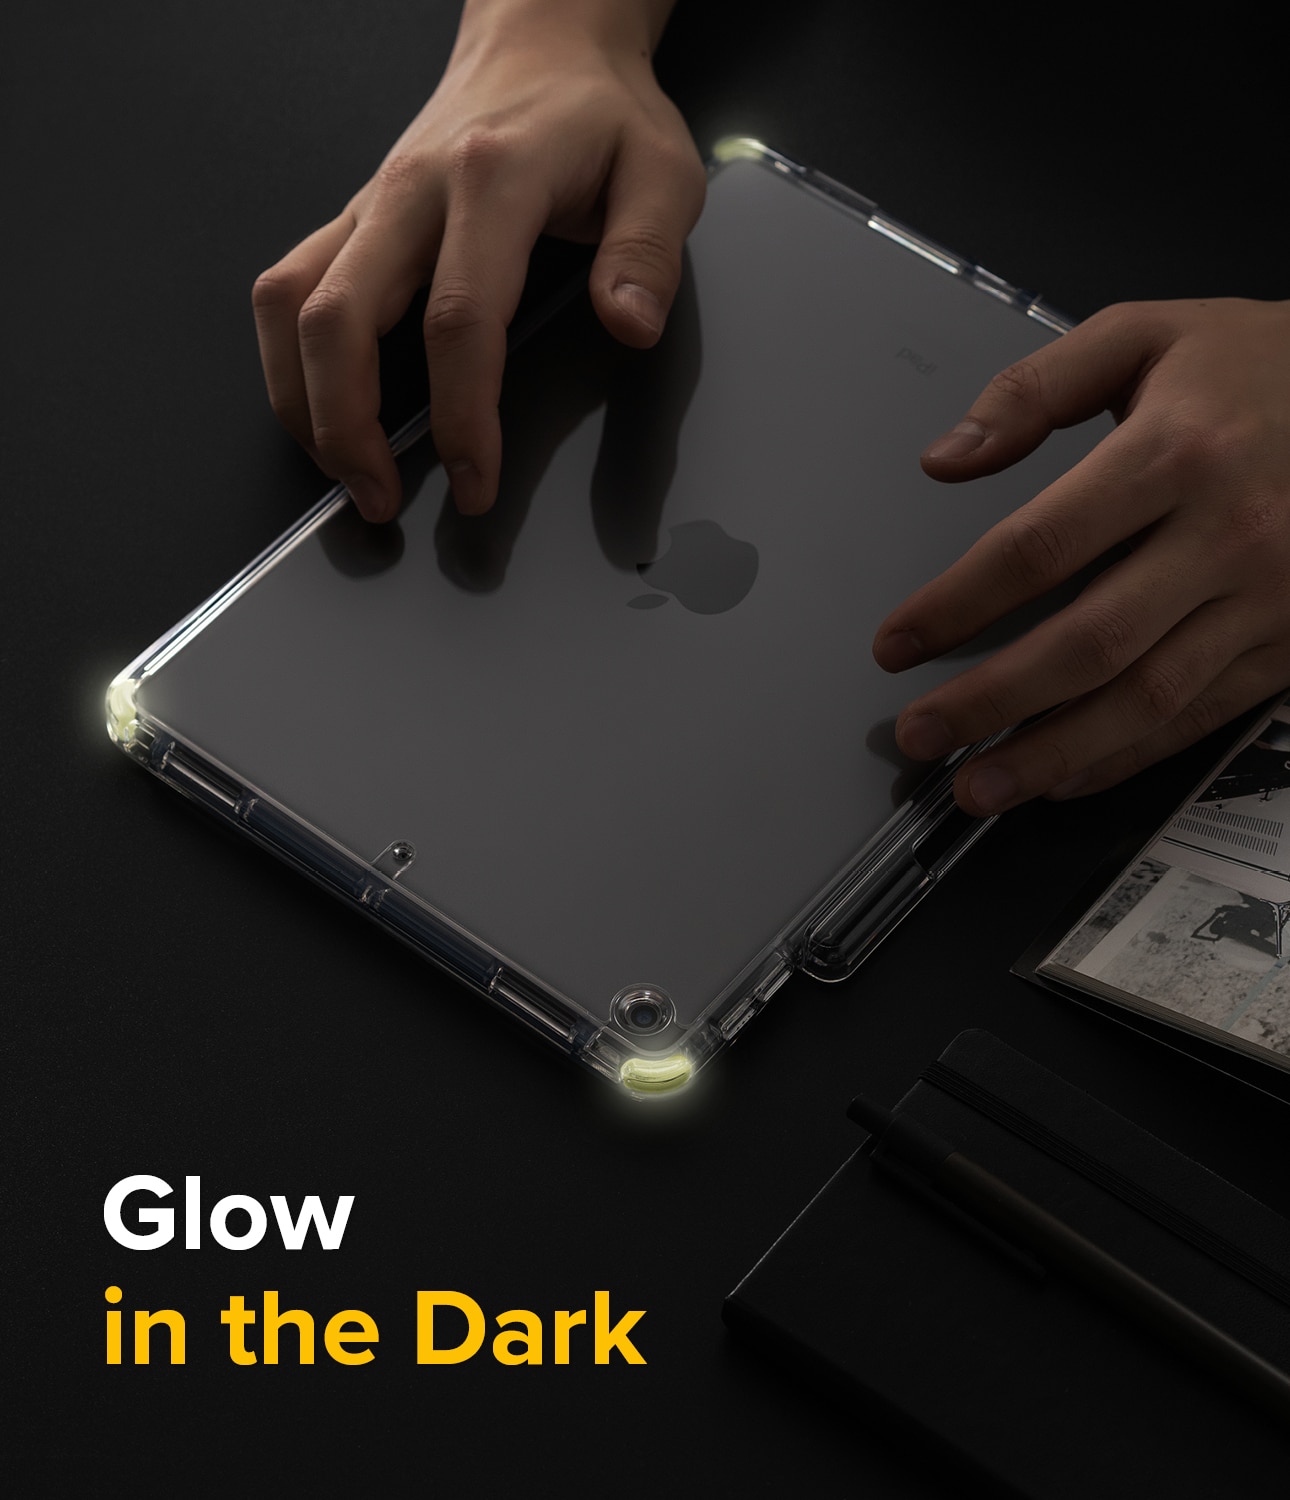 Coque Fusion Plus iPad 10.2 7th Gen (2019), White/Lime Glow